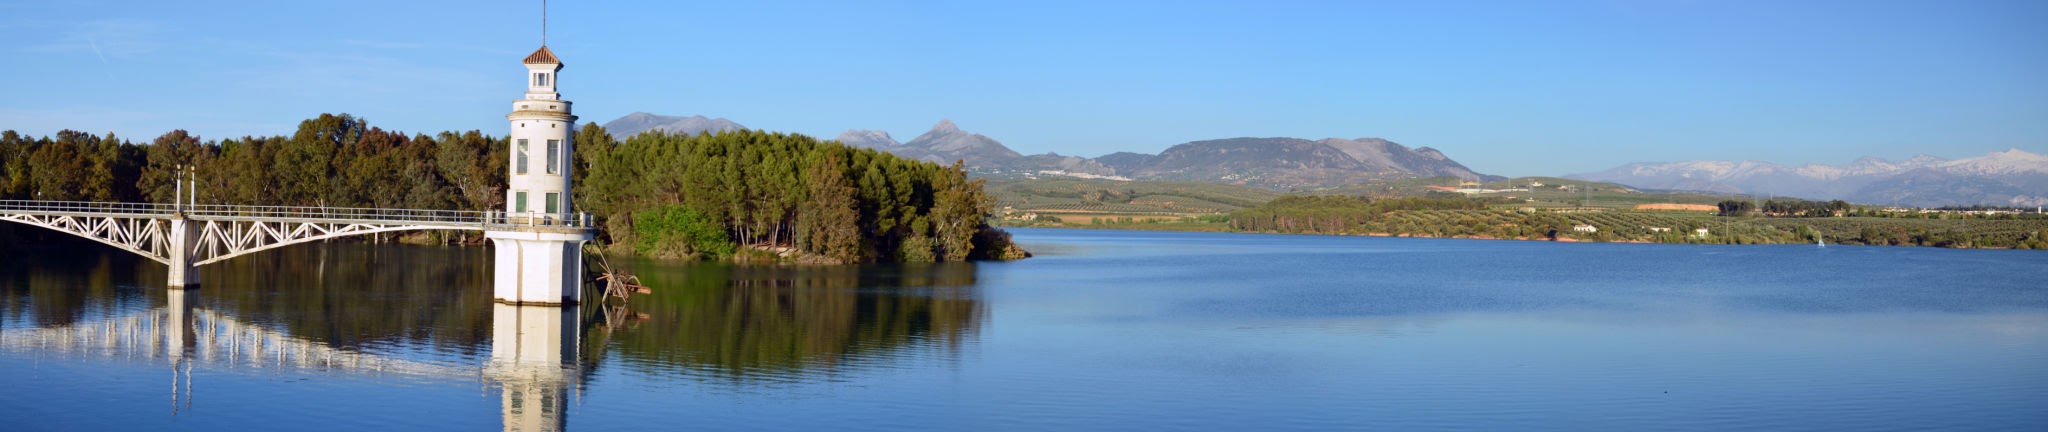 Cubillas Reservoir, Maracena